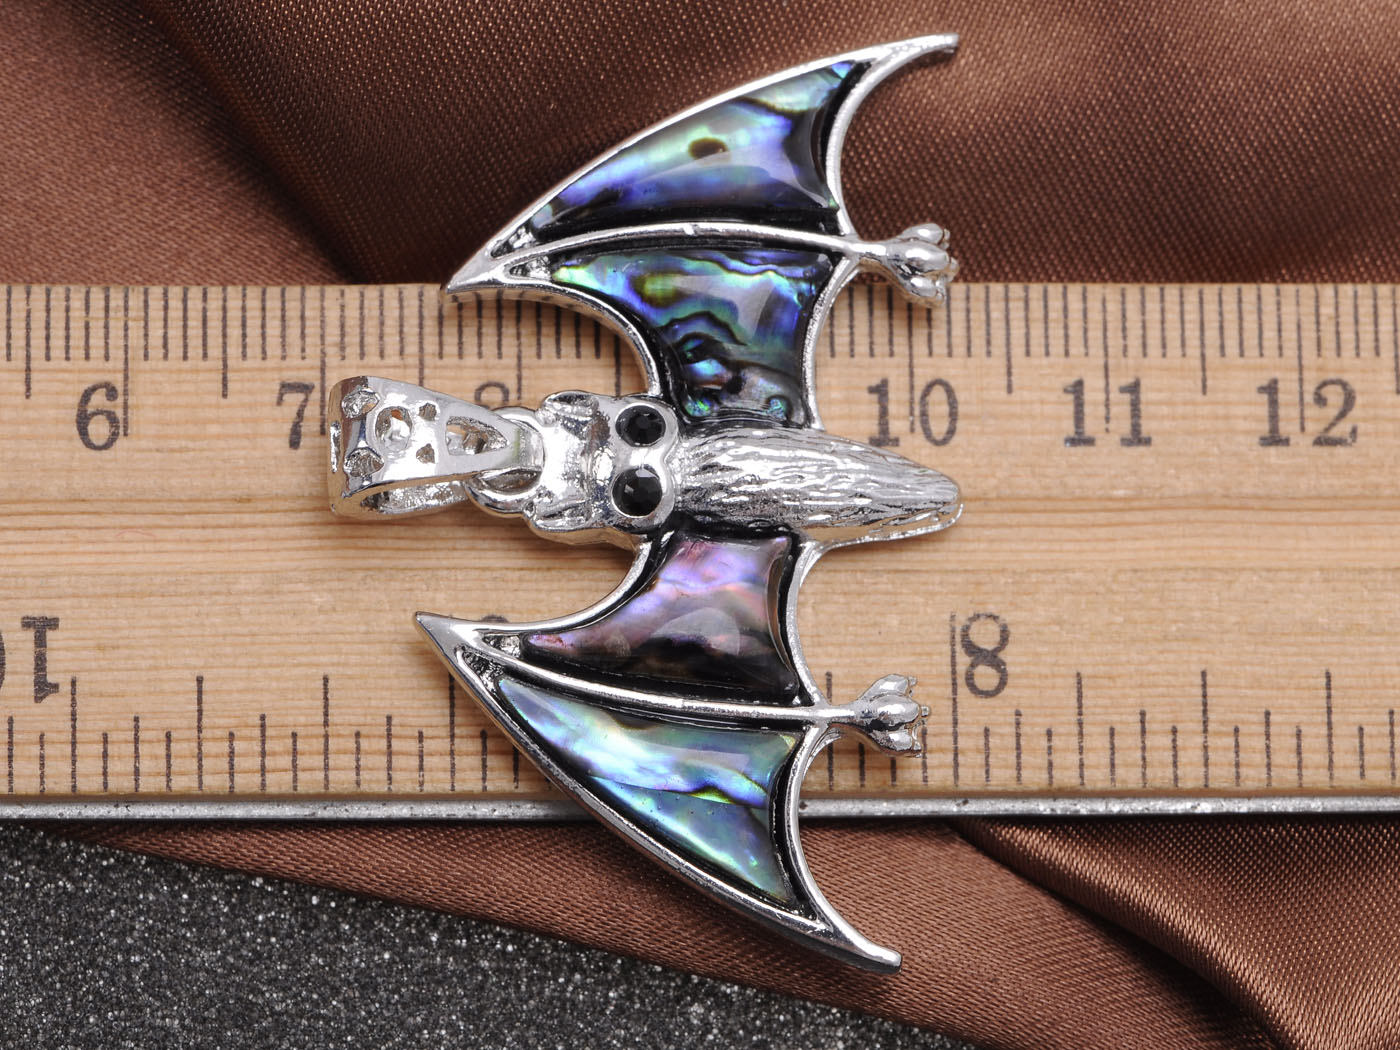 Abalone Spooky Flying Bat Necklace Pendant